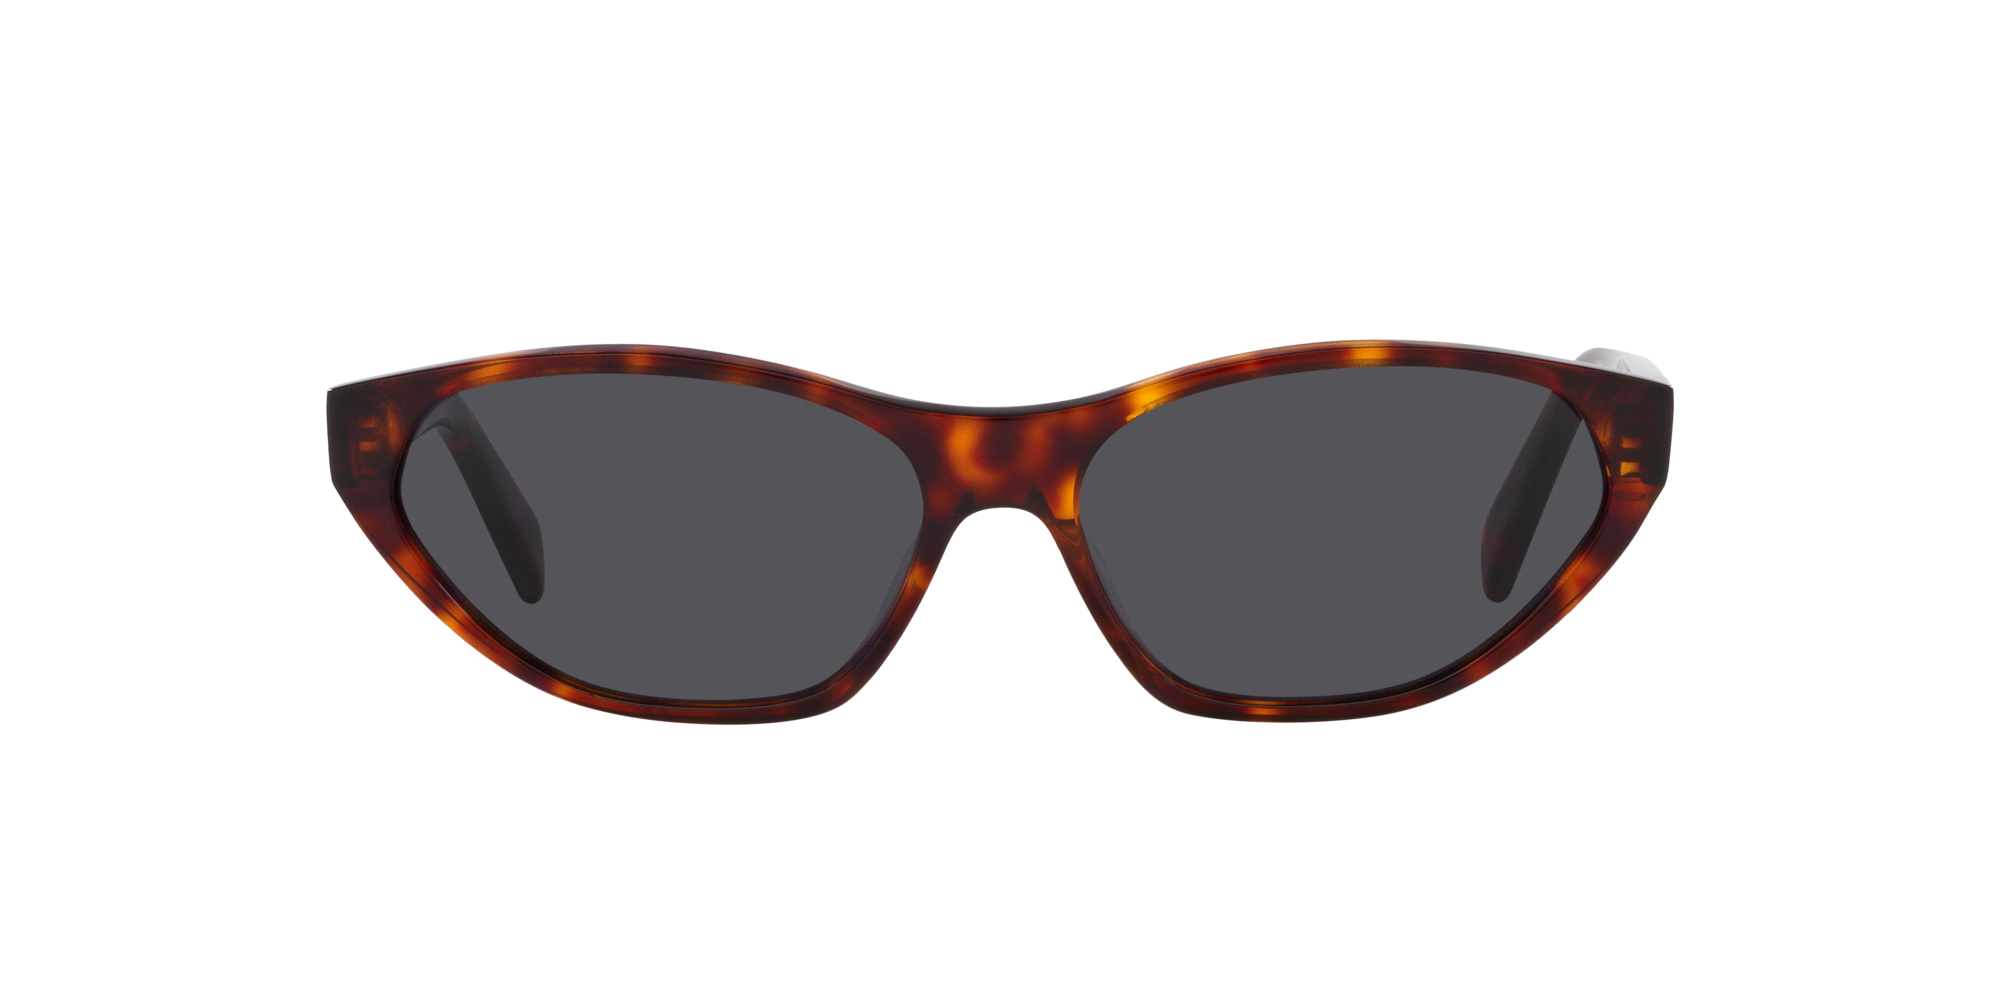 Sunglass Hut Elizabeth | Sunglasses for Men, Women & Kids